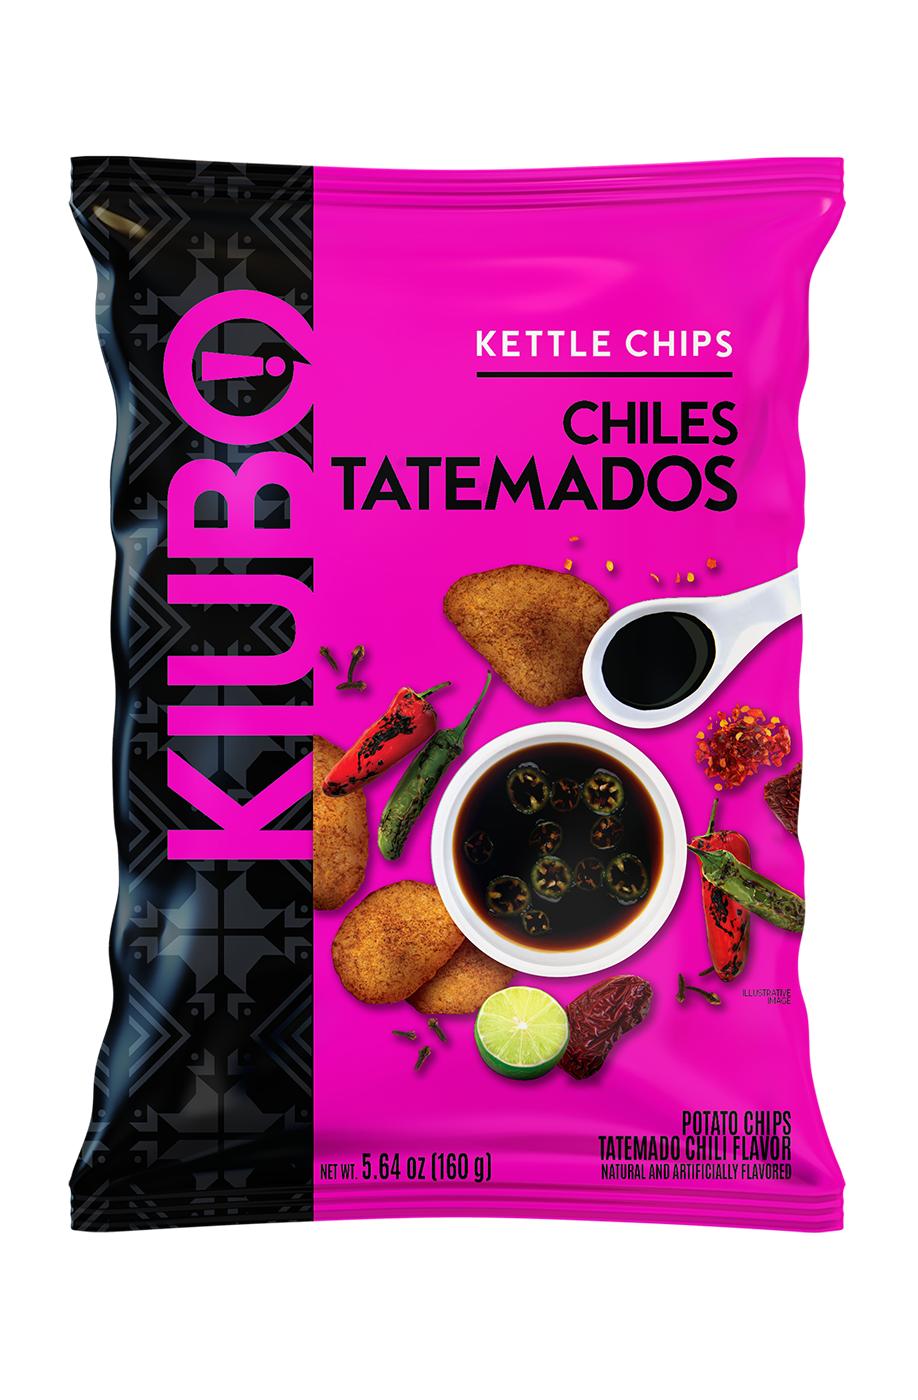 Kiubo Chiles Tatemados Kettle Chips; image 1 of 2